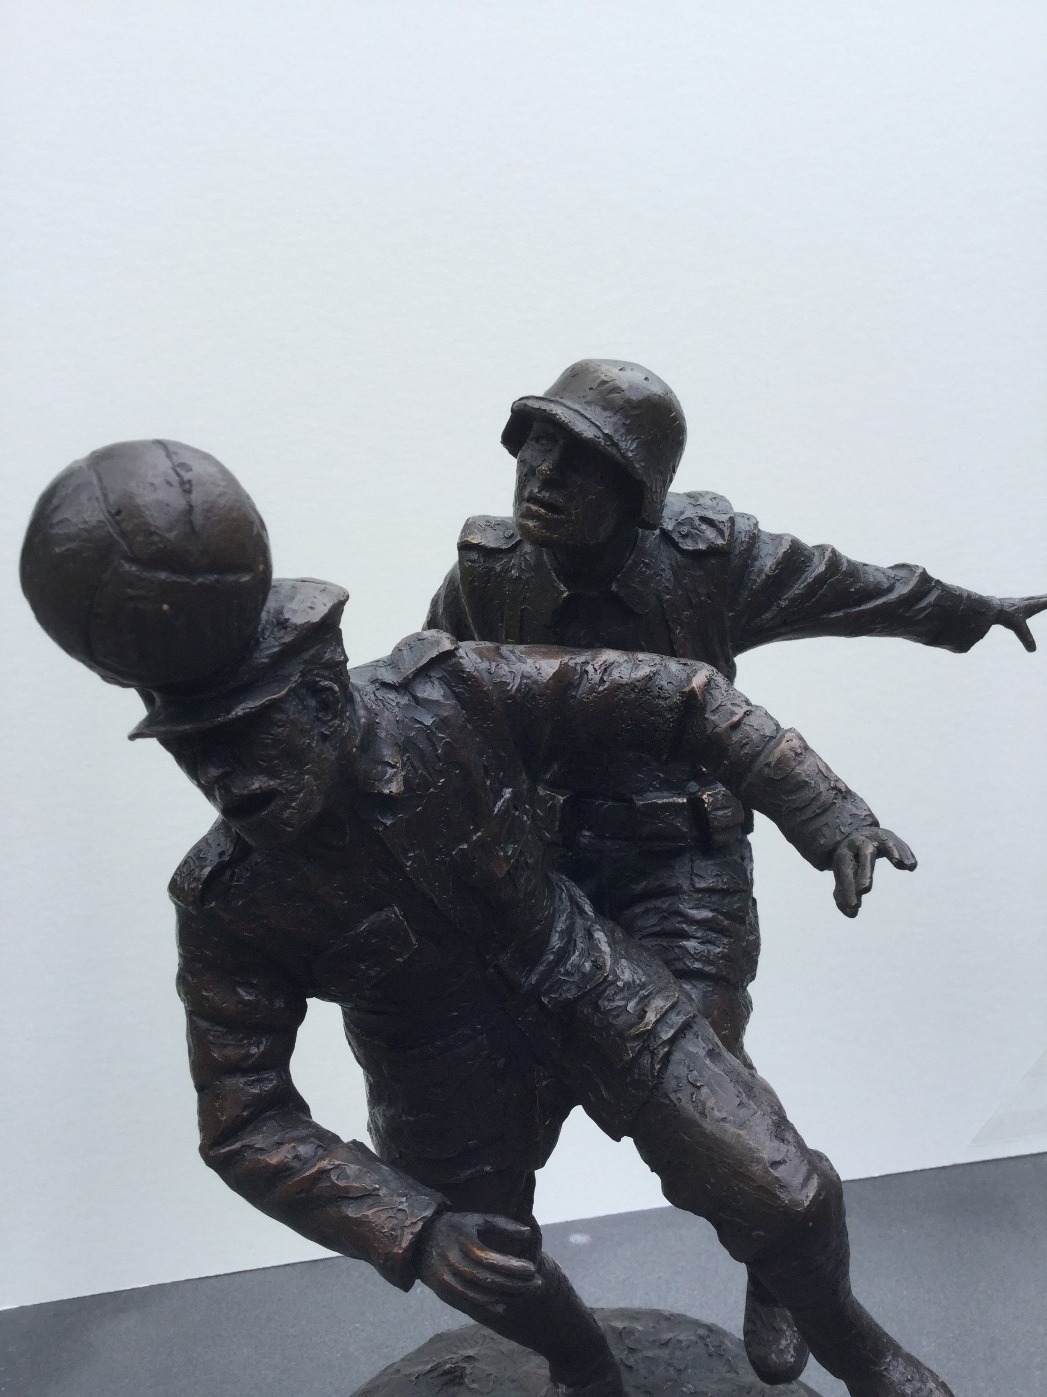 On Me 'Ed, Kamerad! by Bob Barker, Sculpture | war | Football | Nostalgic | Figurative